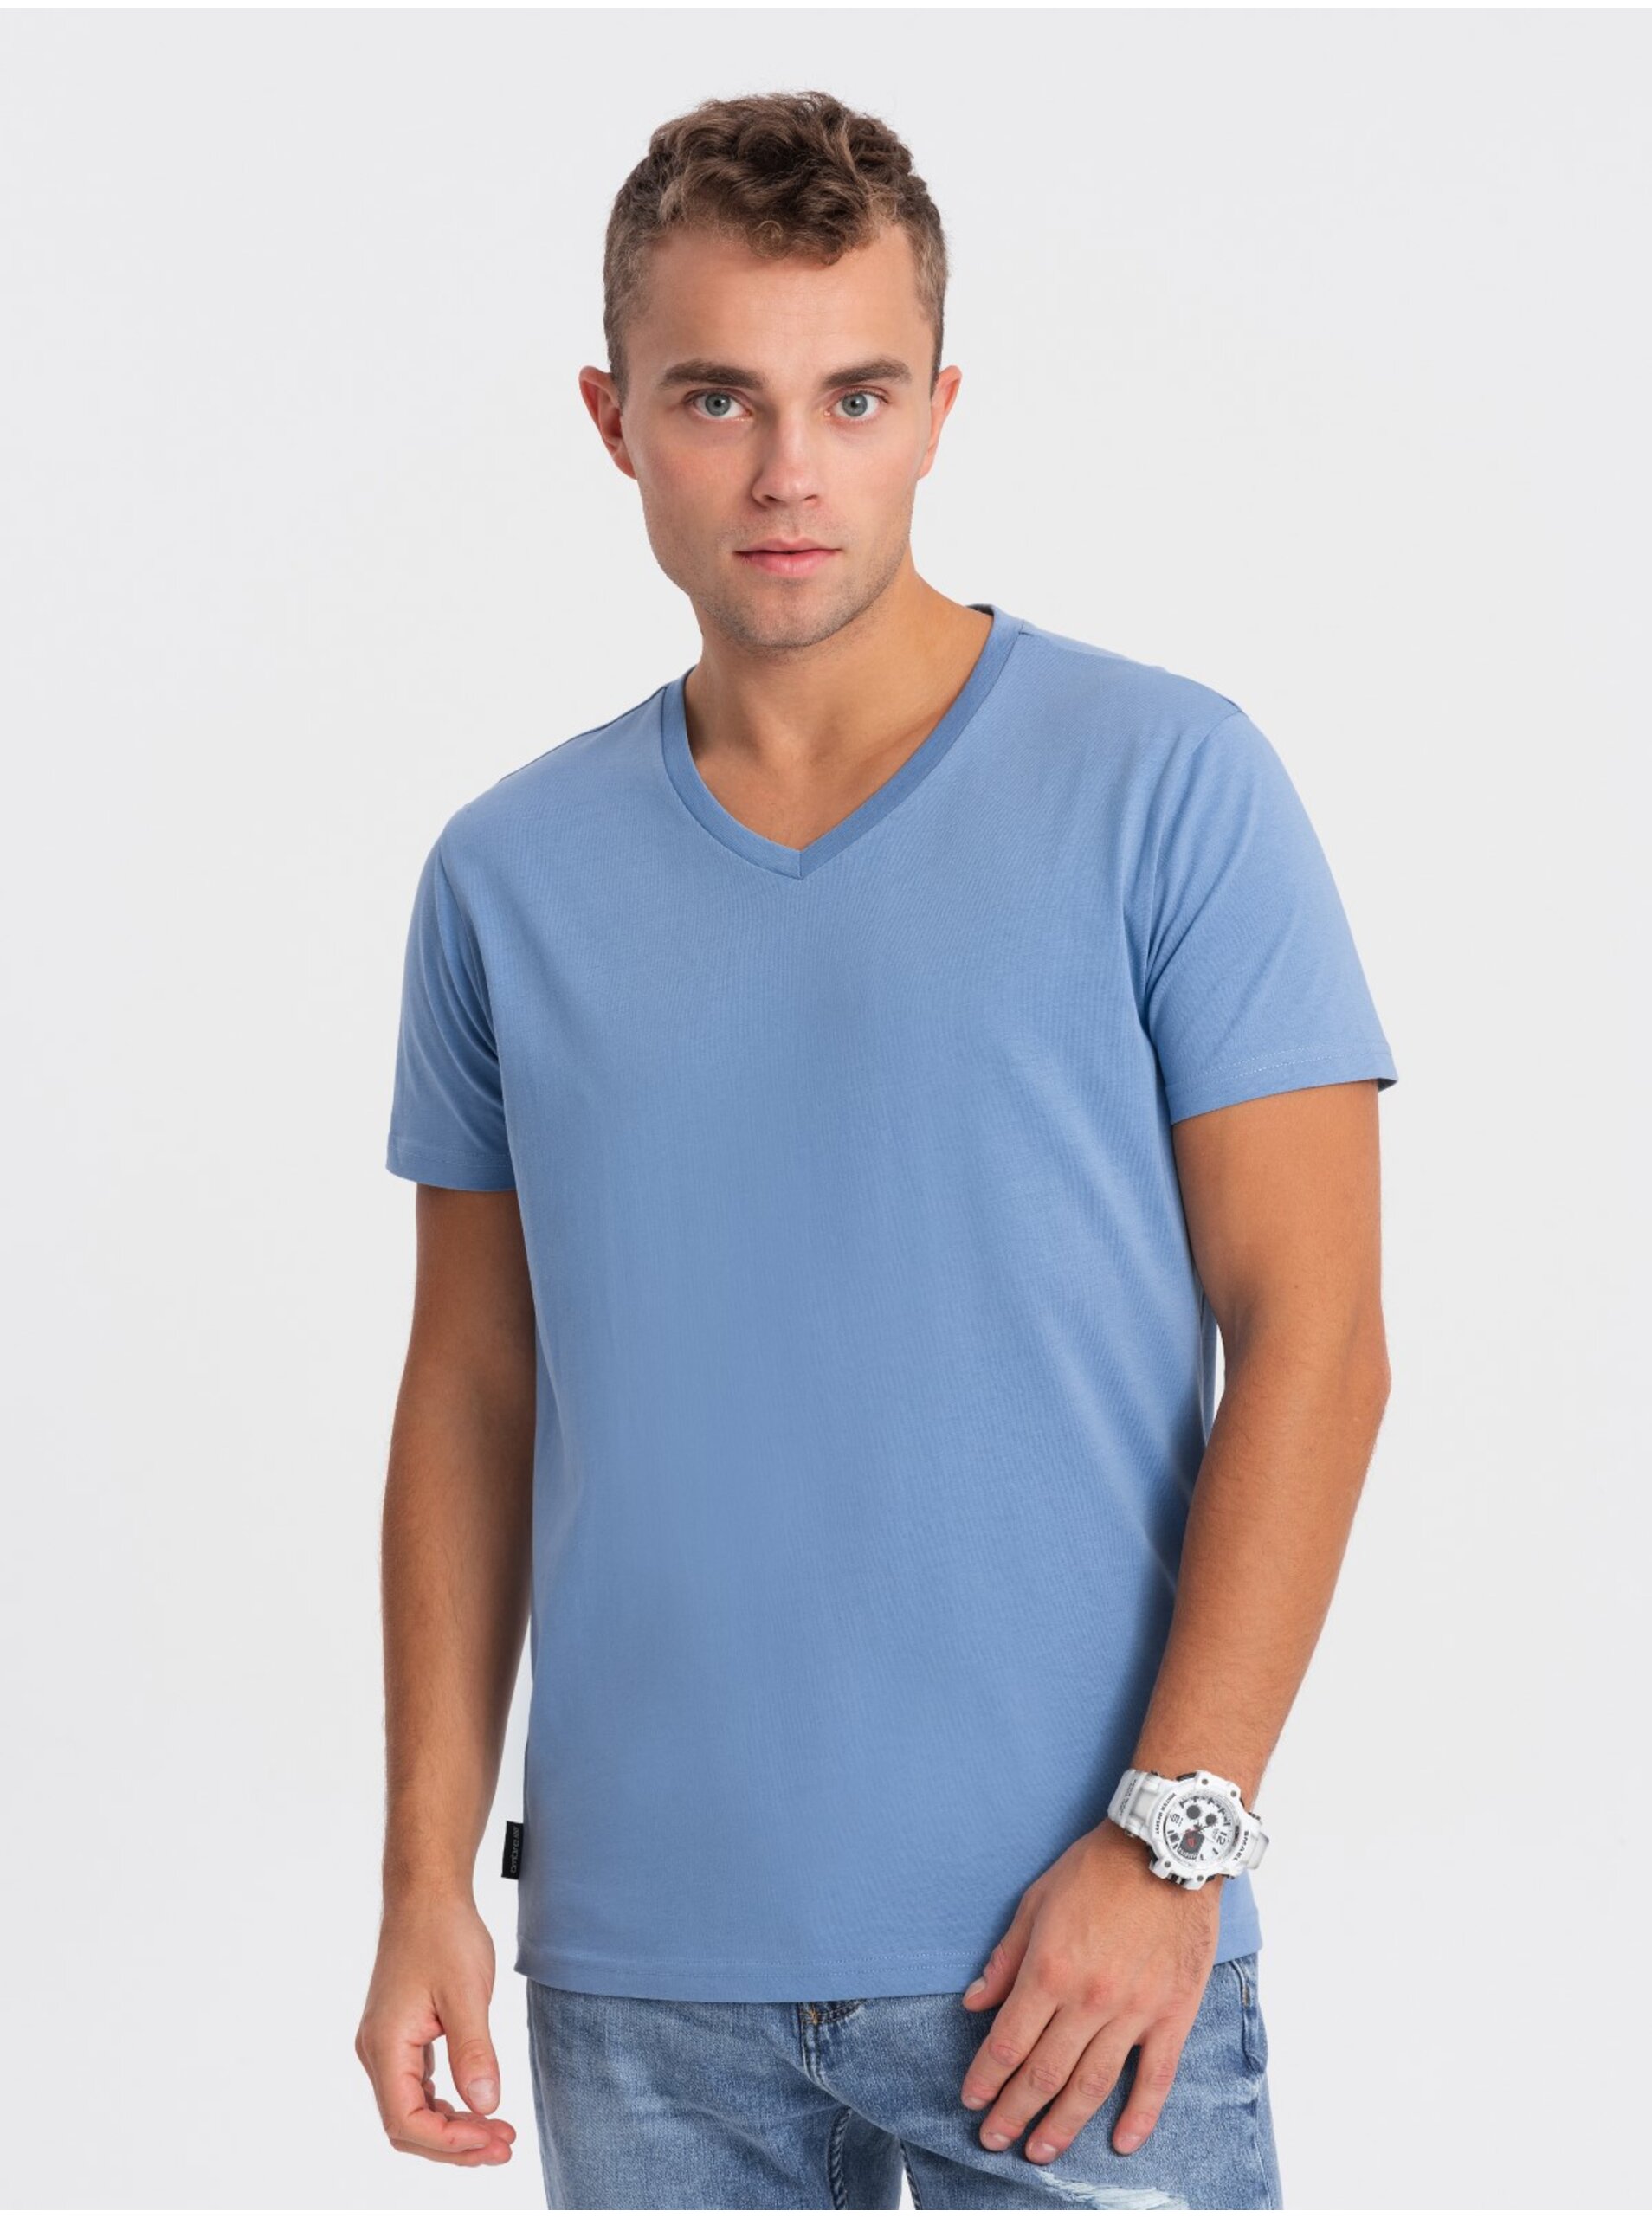 Lacno Modré pánske basic tričko s véčkovým výstrihom Ombre Clothing